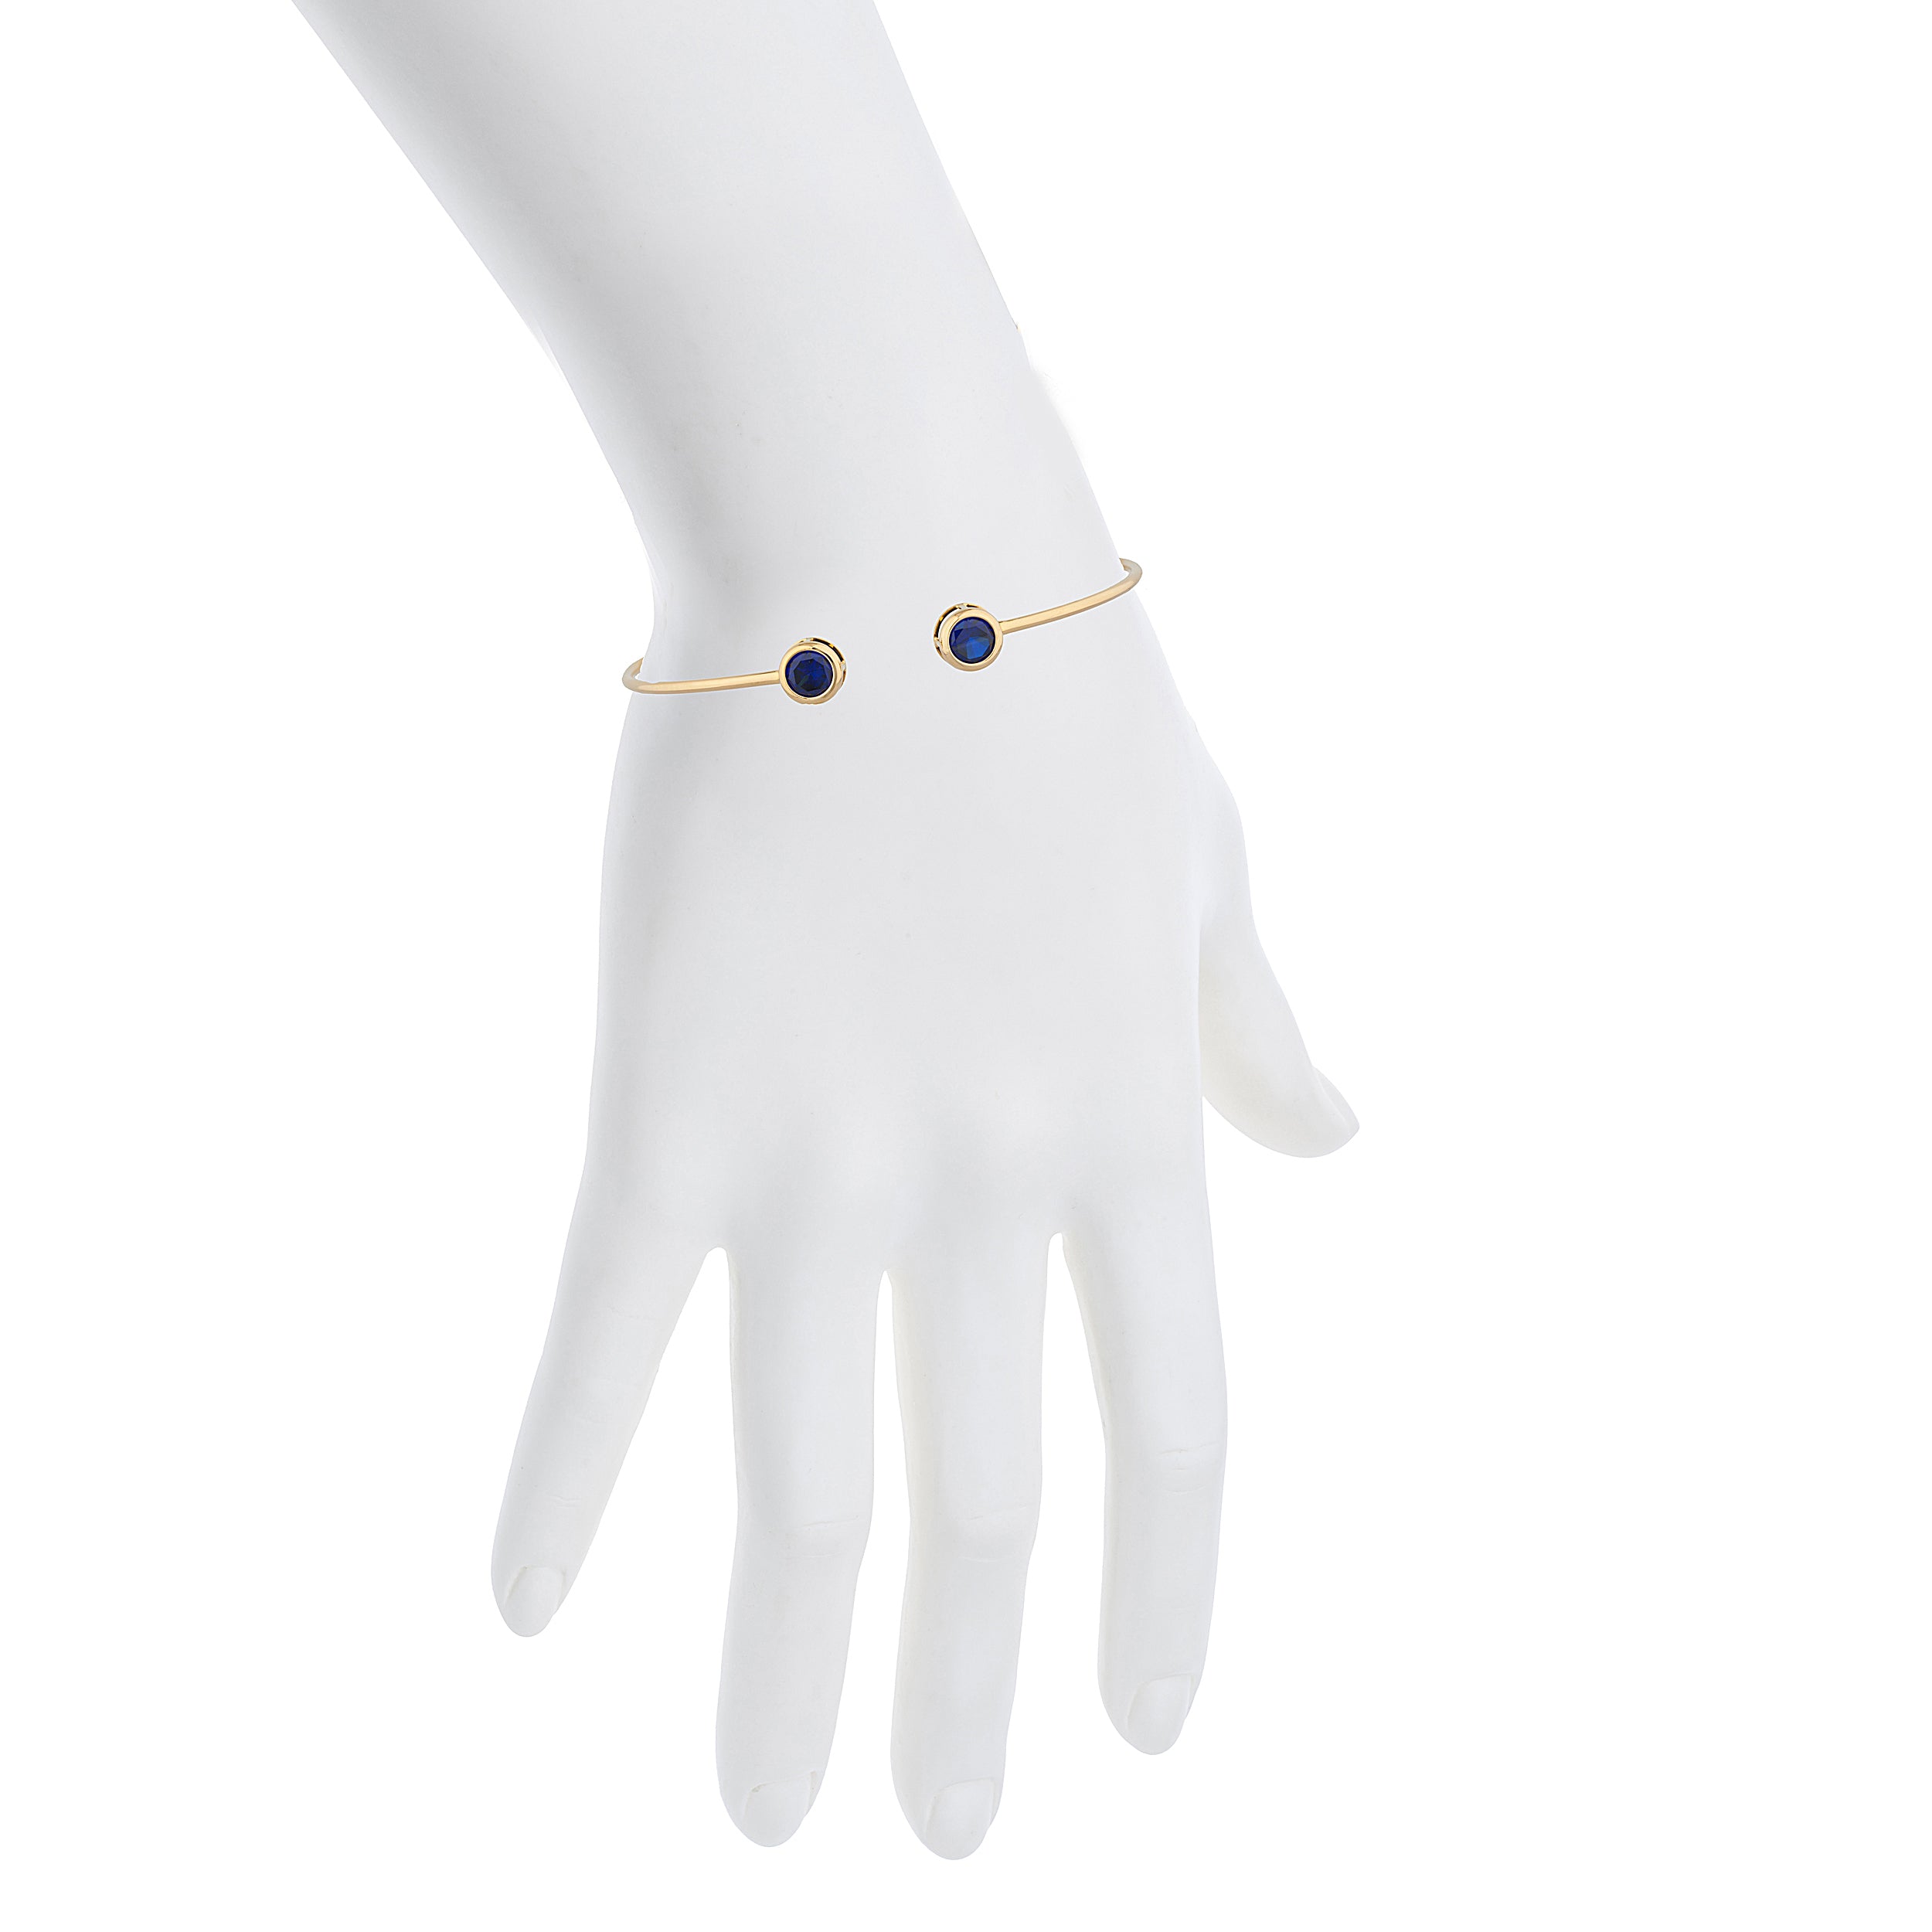 14Kt Gold Blue Sapphire Round Bezel Bangle Bracelet